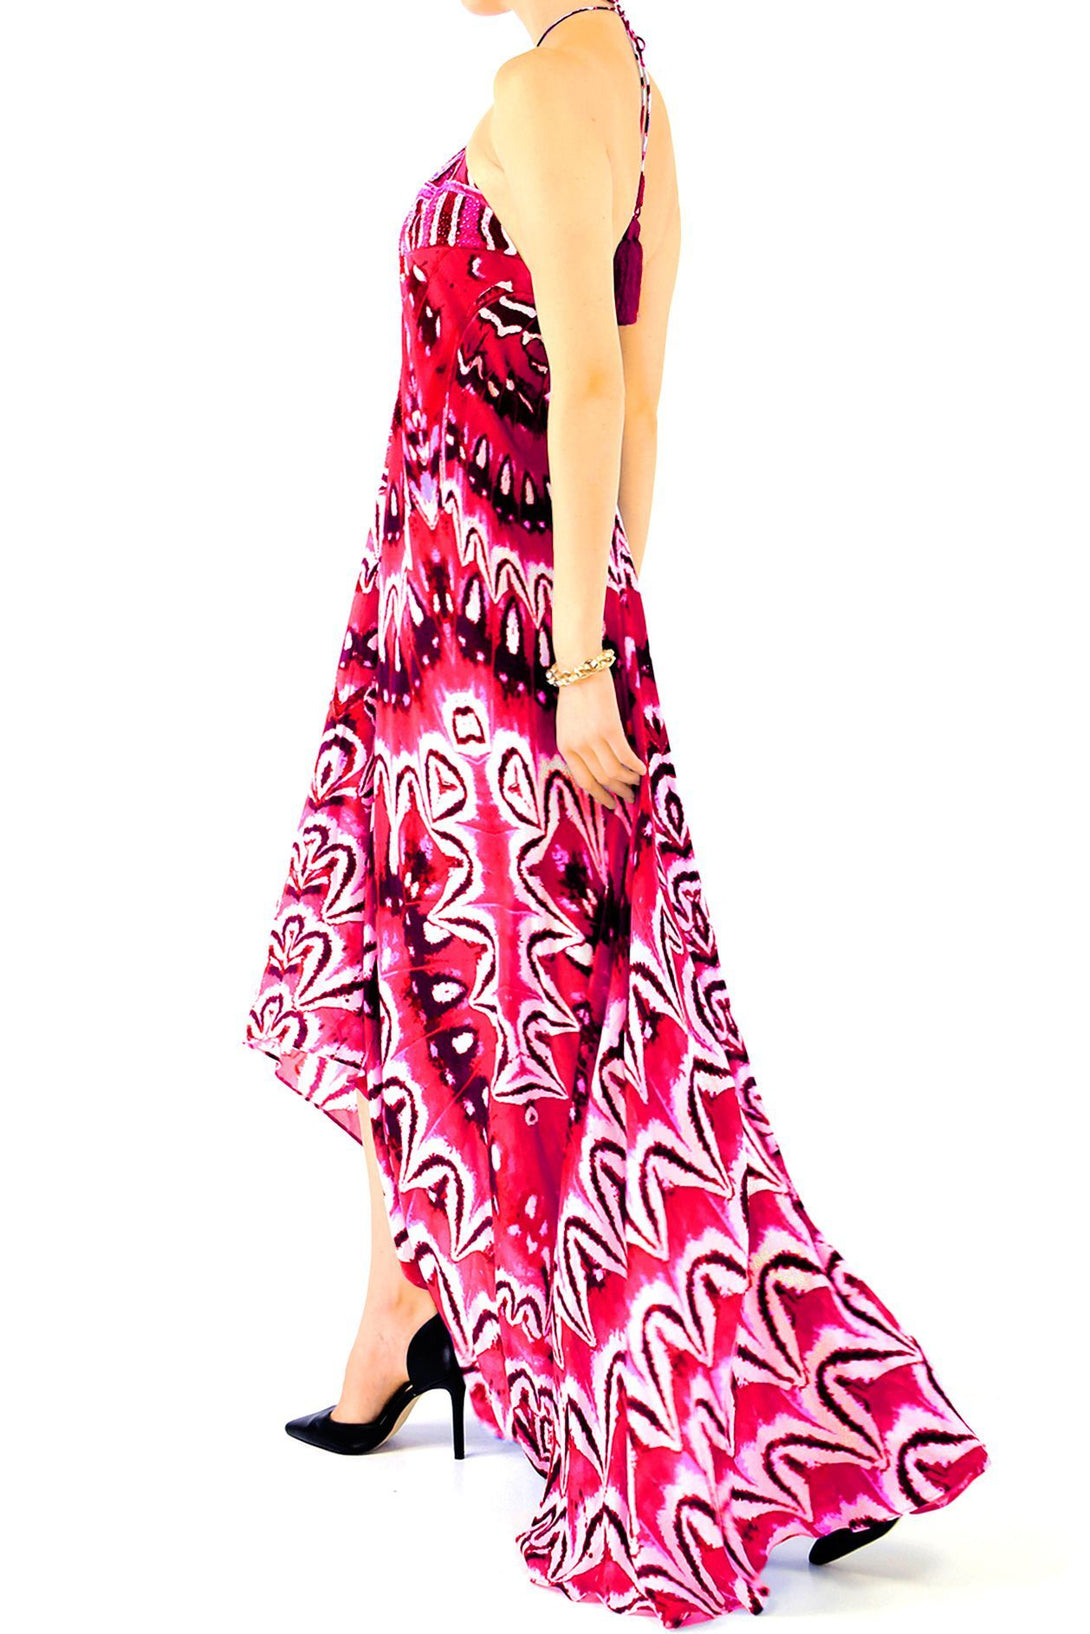  hot pink dresses for women, formal dresses for women, Shahida Parides, plunging neckline cocktail dress,